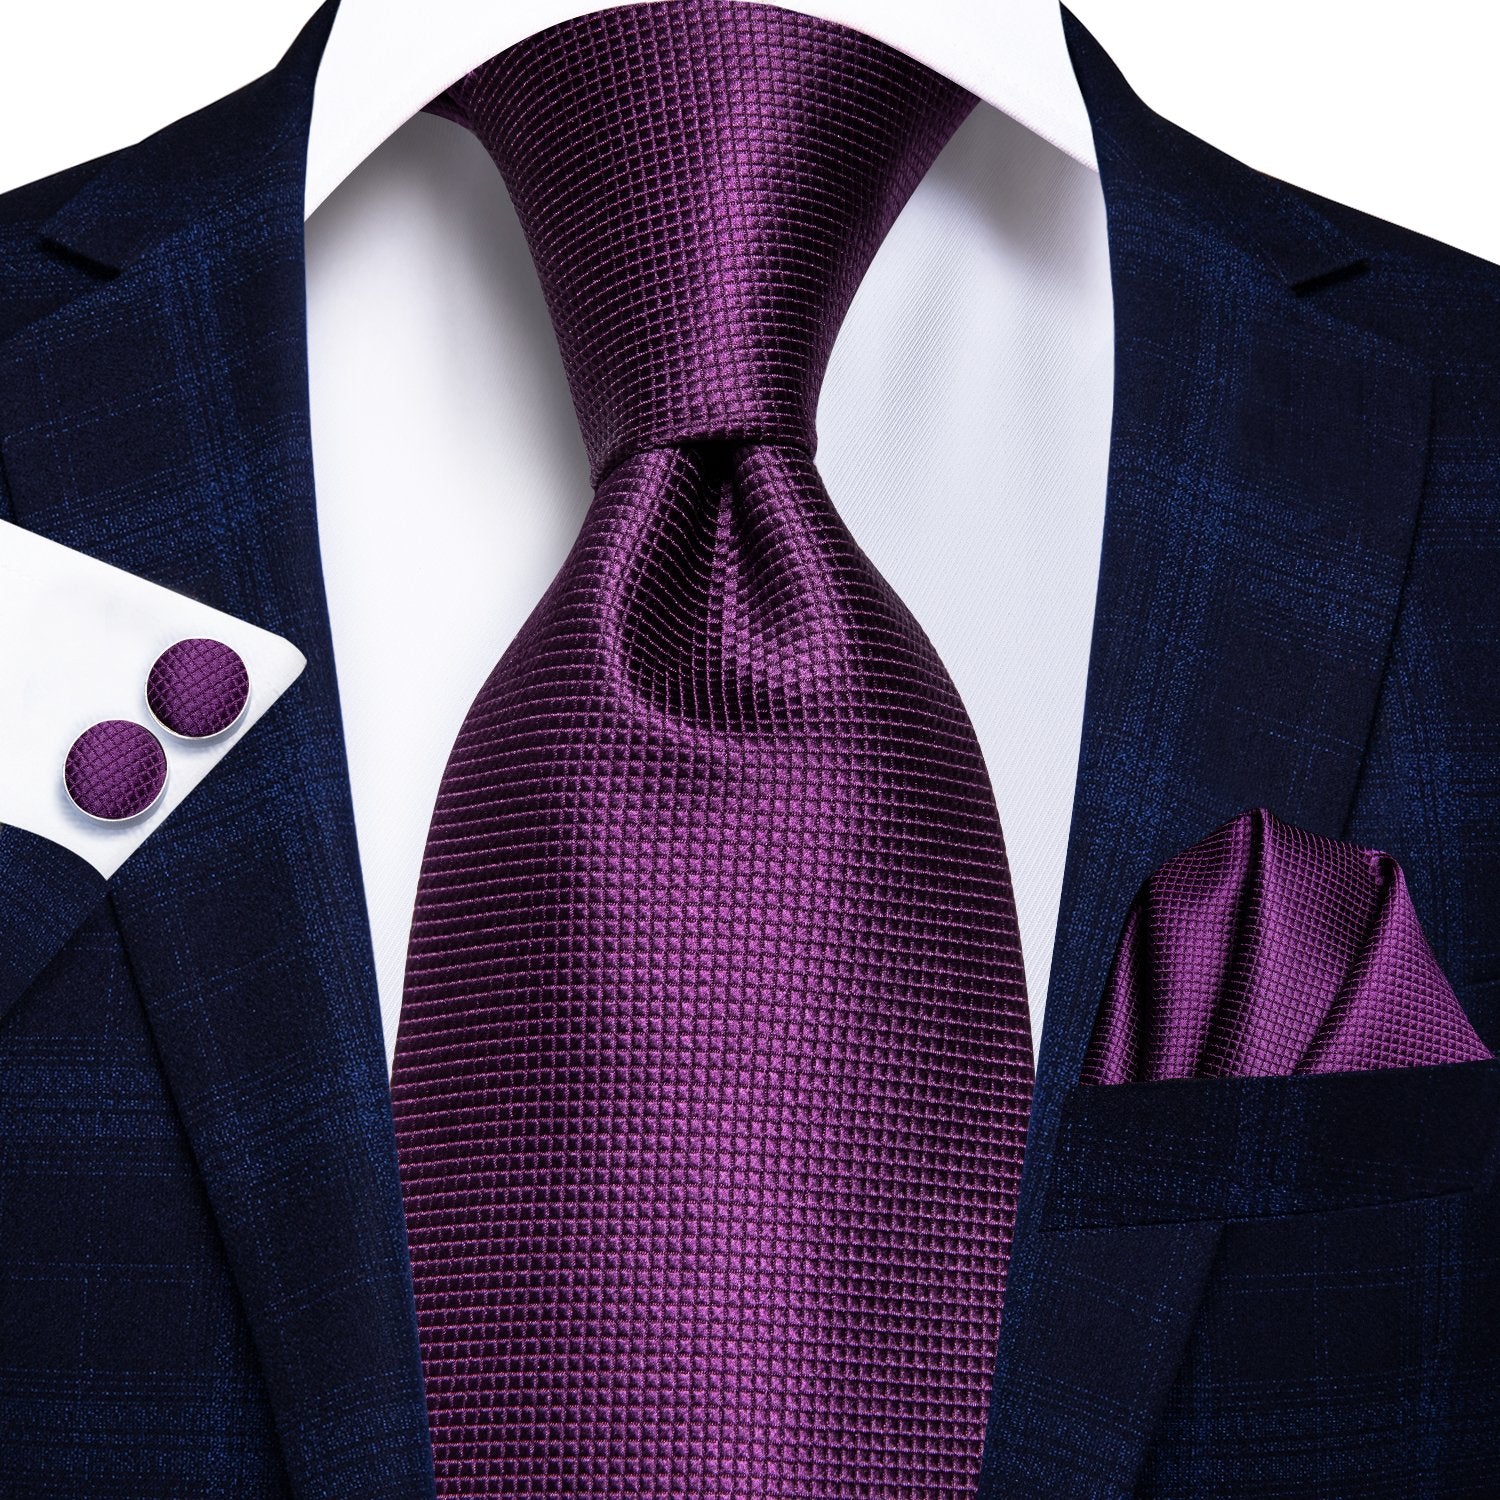 Purple Solid Tie Tie Handkerchief Cufflinks Set with Wedding Brooch